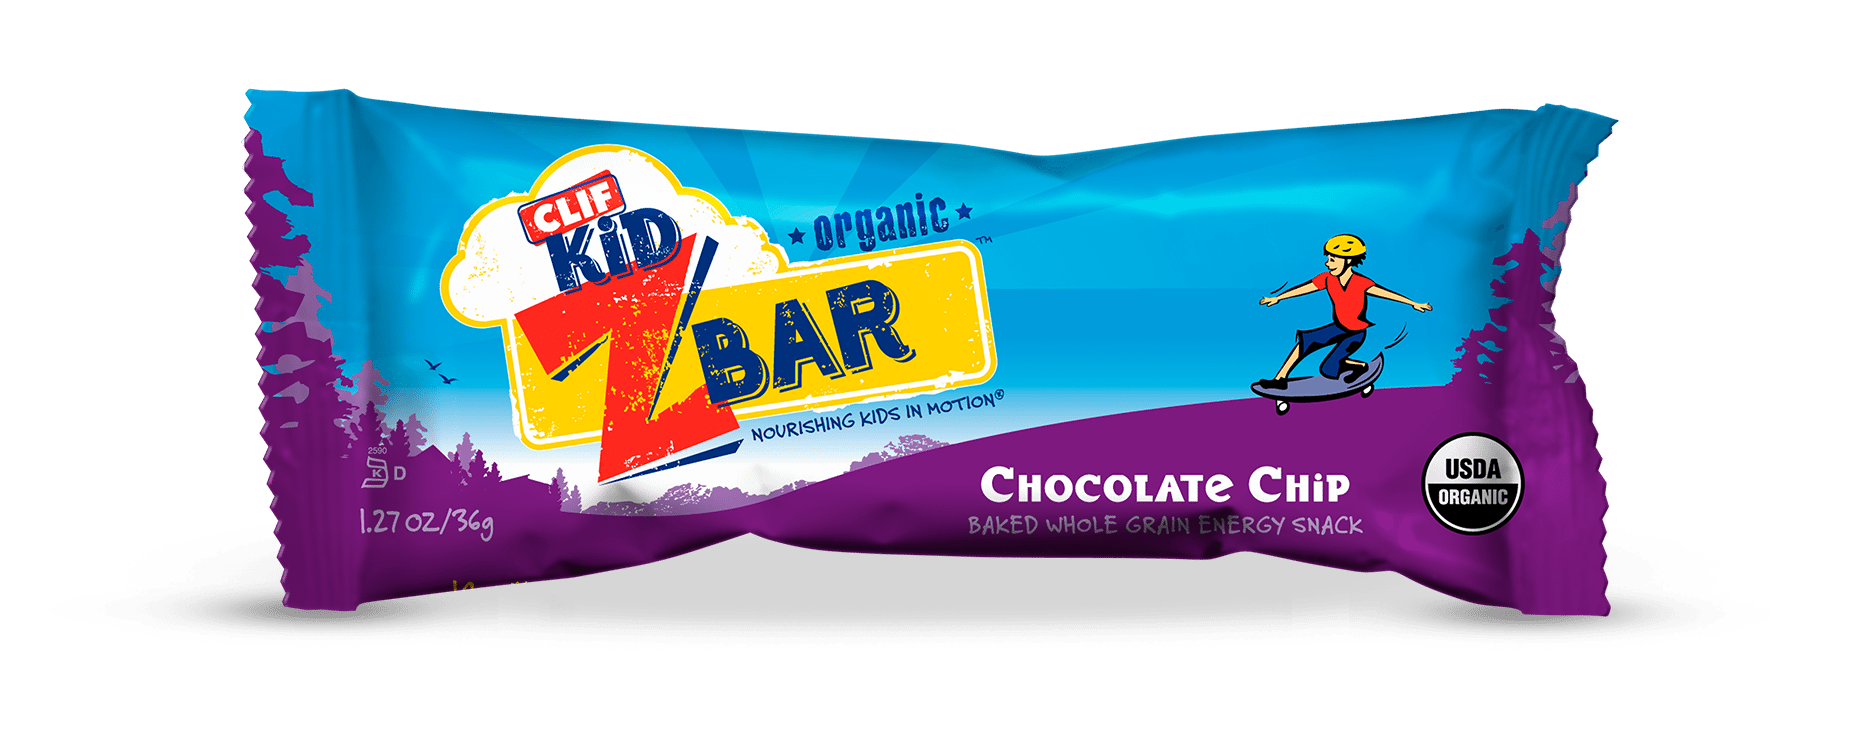 Clif Kid Z Bar: Chocolate Chip